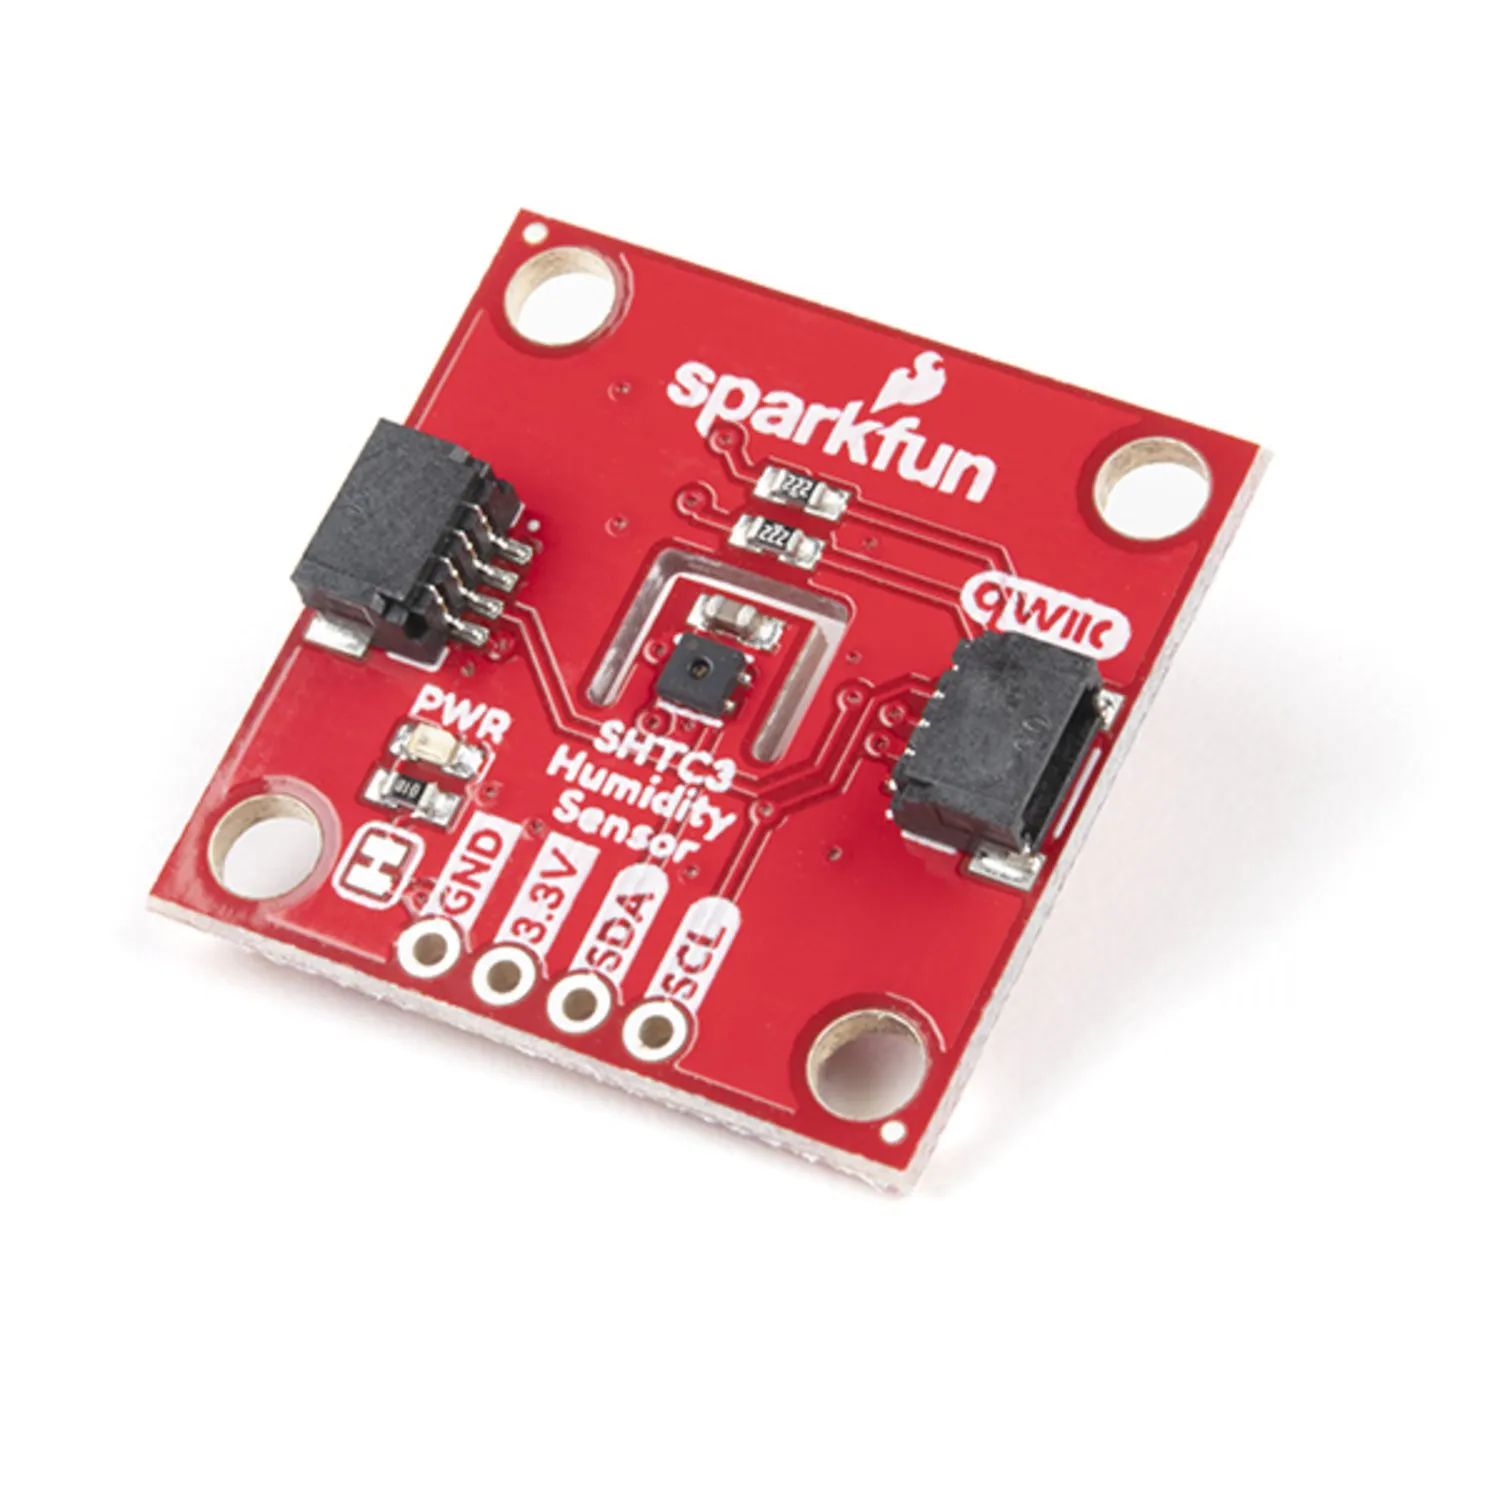 Photo of SparkFun Humidity Sensor Breakout - SHTC3 (Qwiic)